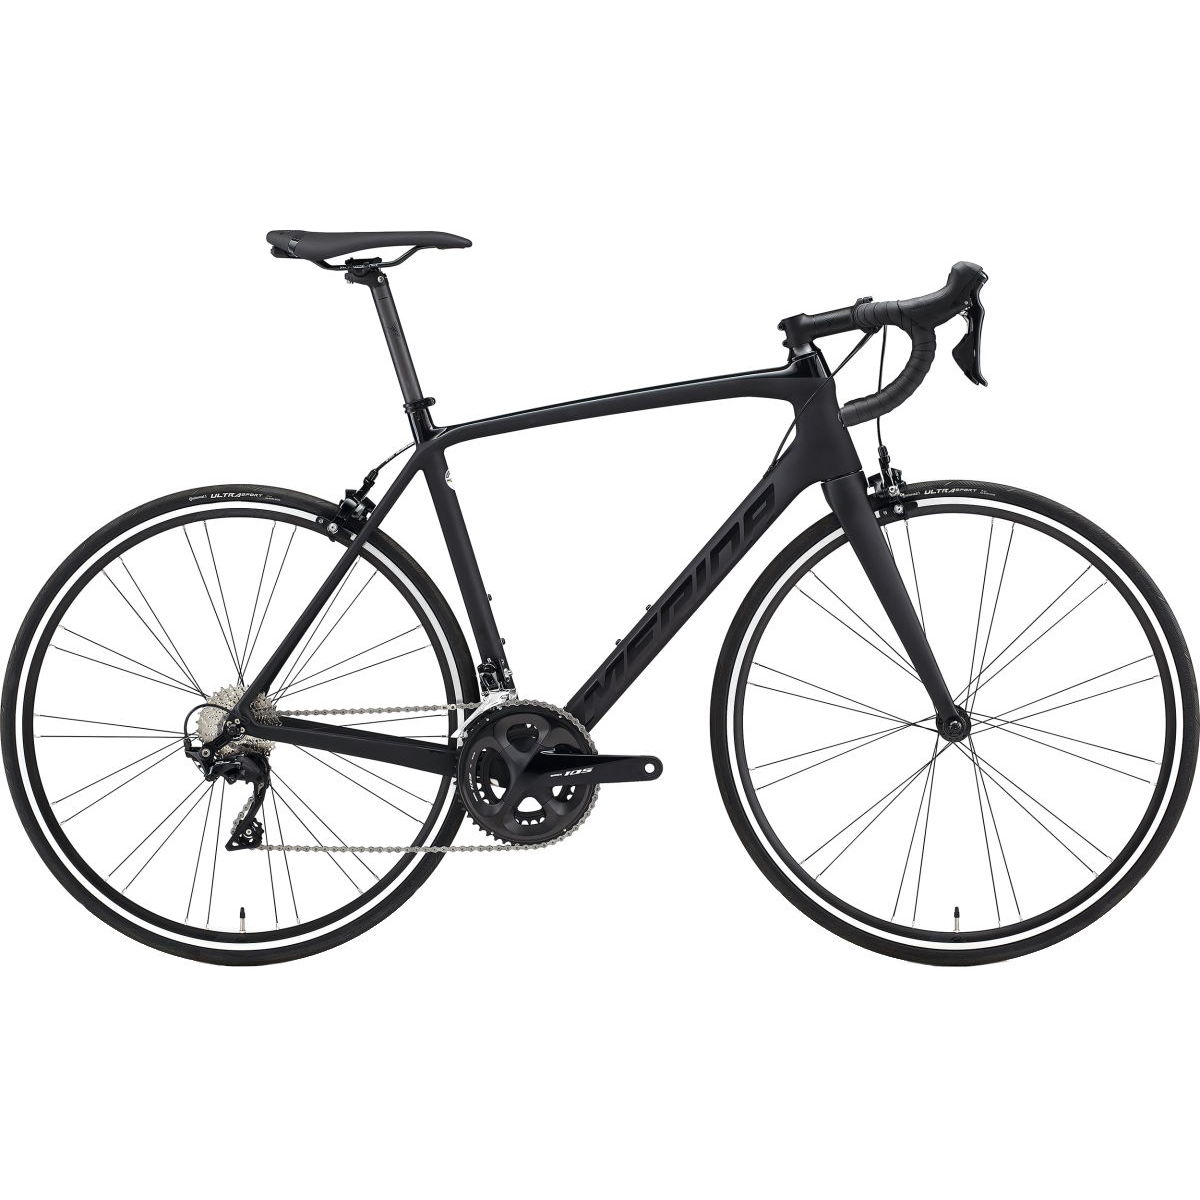 Велосипед Merida Scultura Rim 4000 2021 frame XS